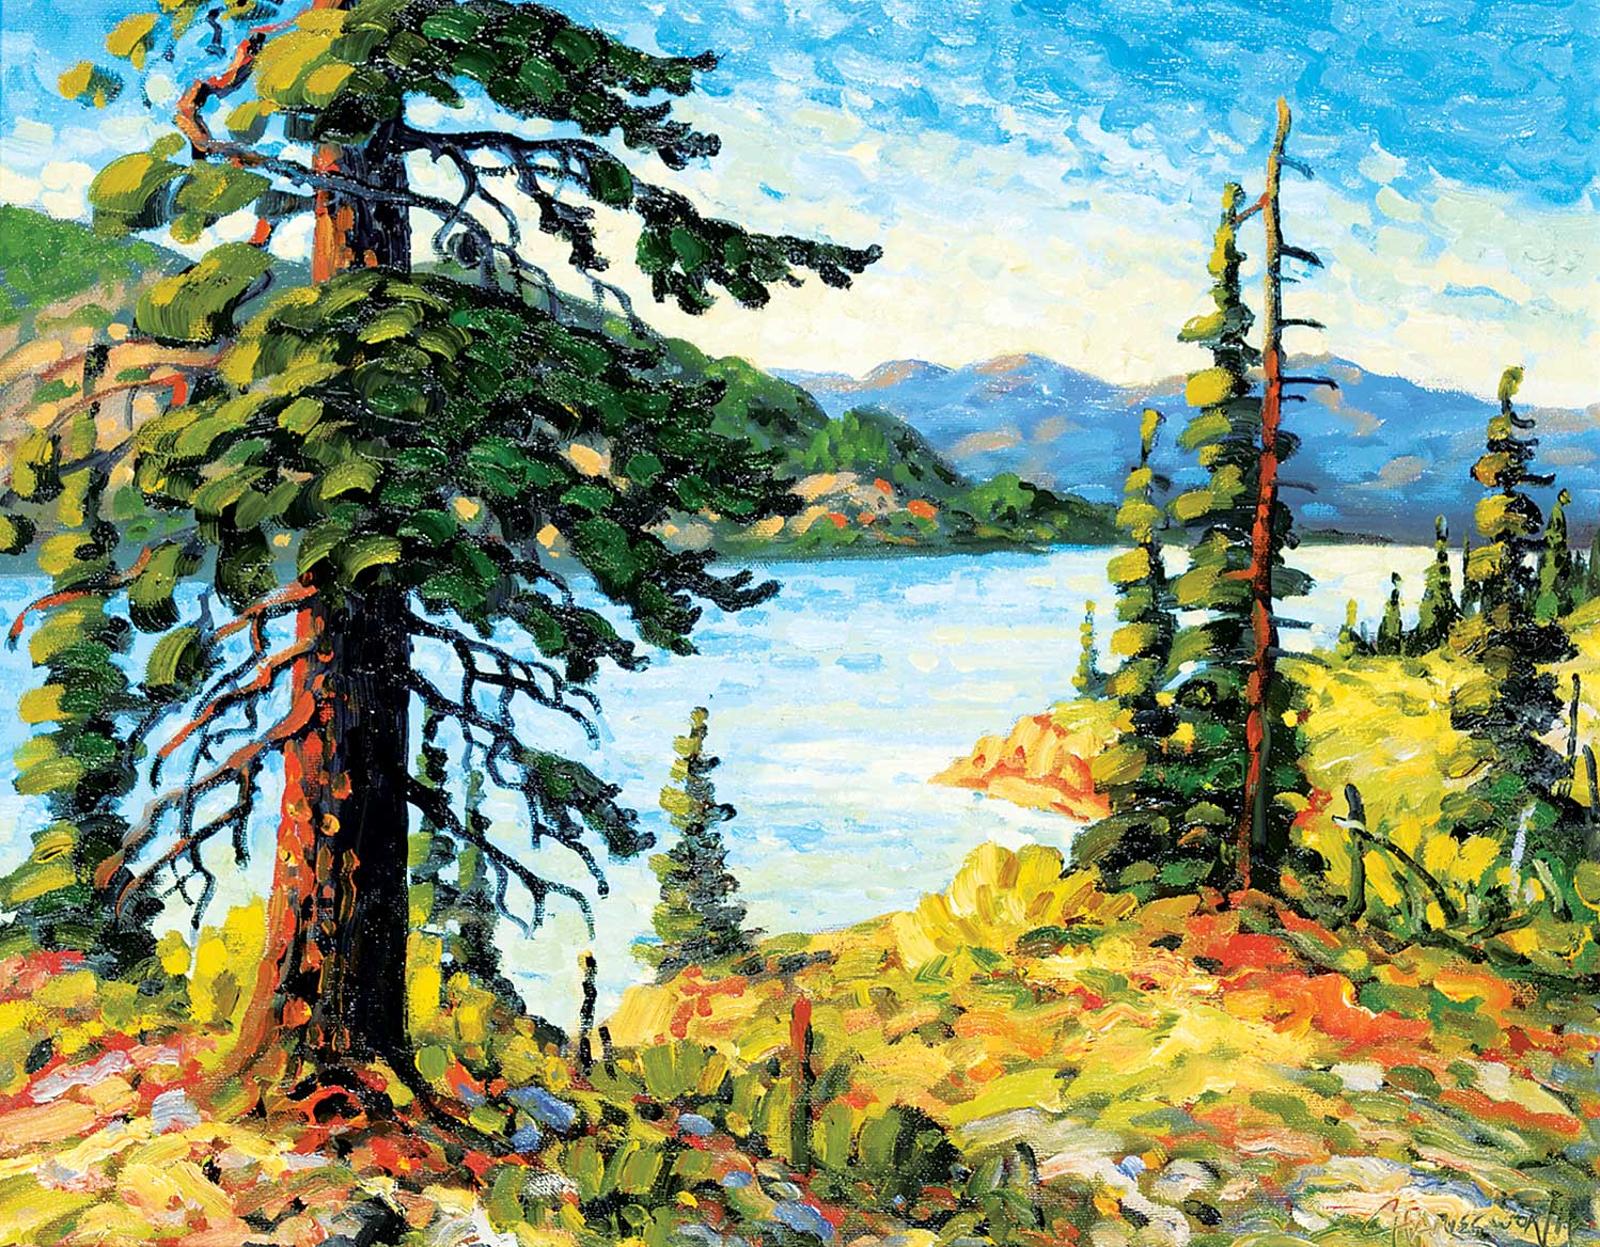 Rod Charlesworth (1955) - Looking North, Okanagan Lake